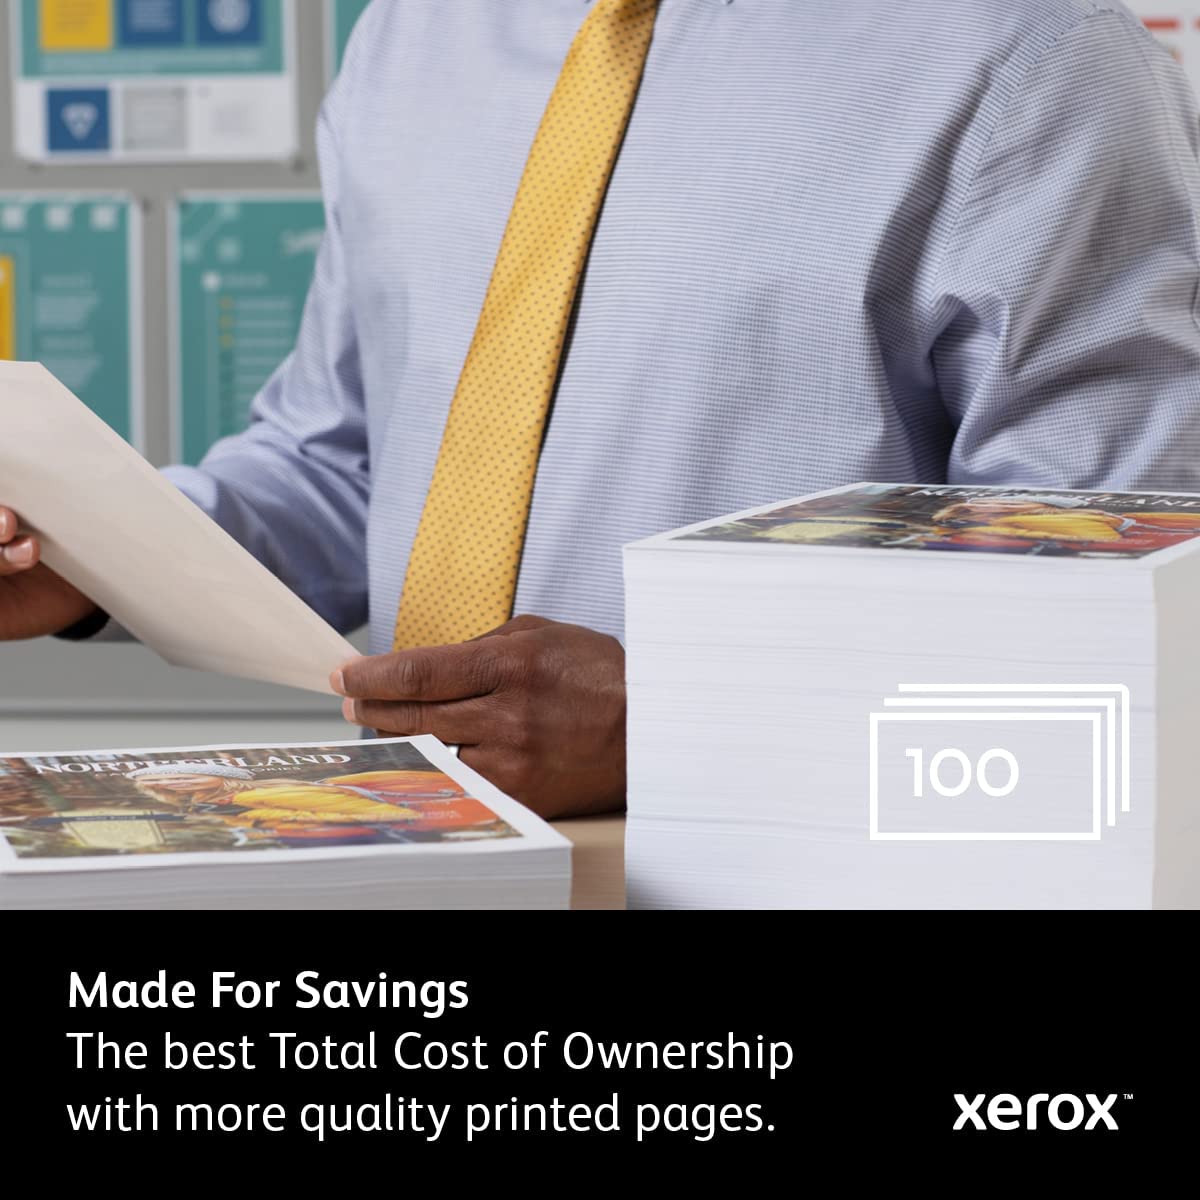 Xerox VersaLink C400/C405 Yellow Standard Capacity Toner-Cartridge (2,500 Pages) - 106R03501